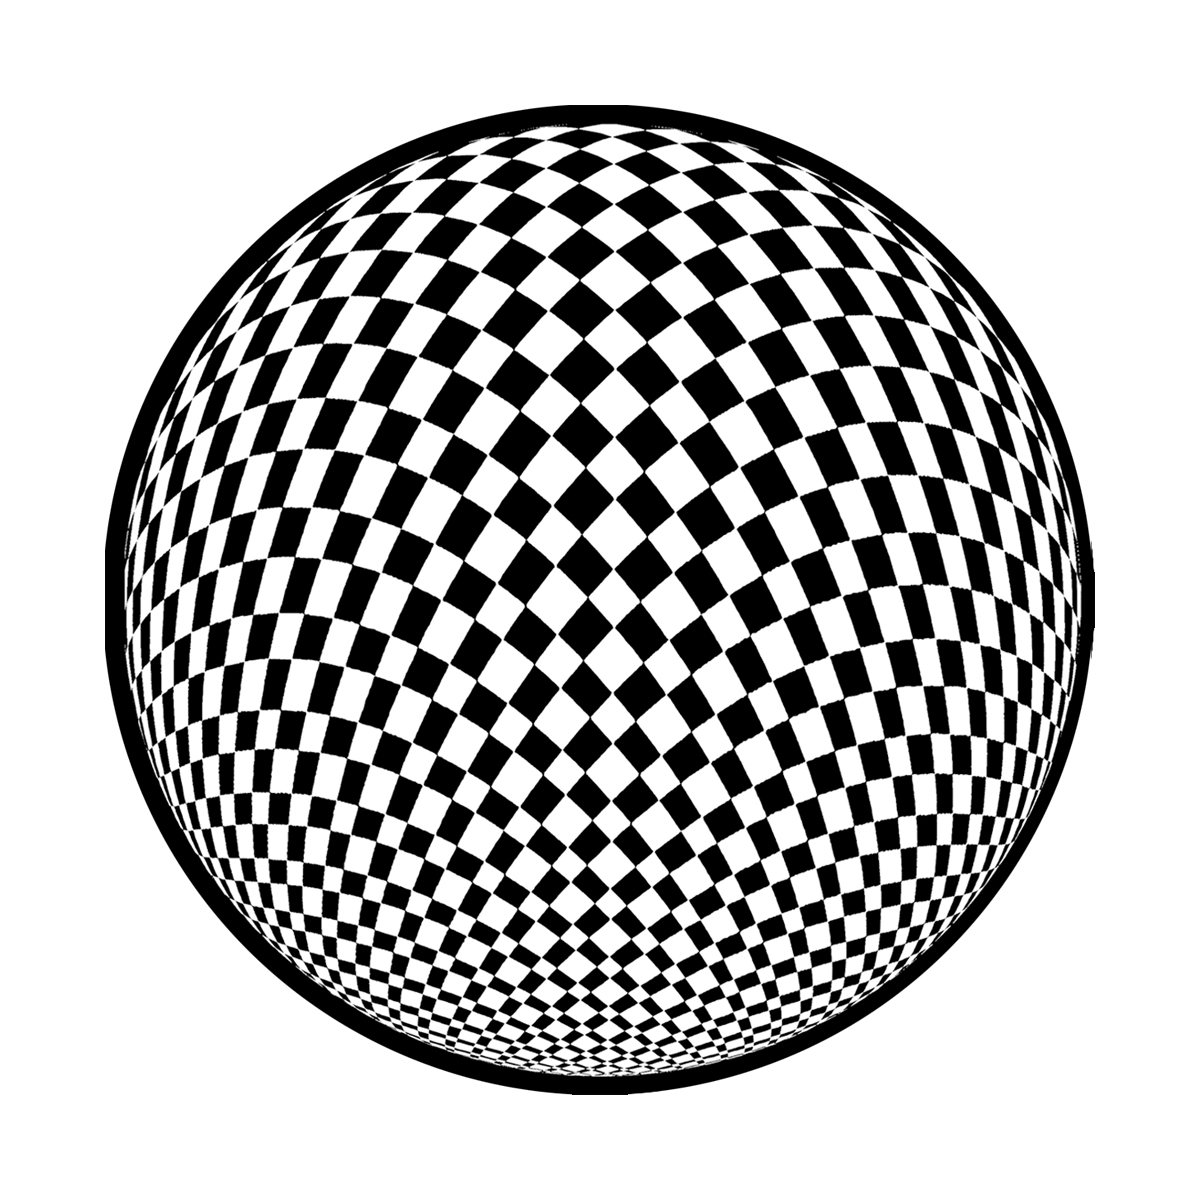 SR-6214 Checker Ball